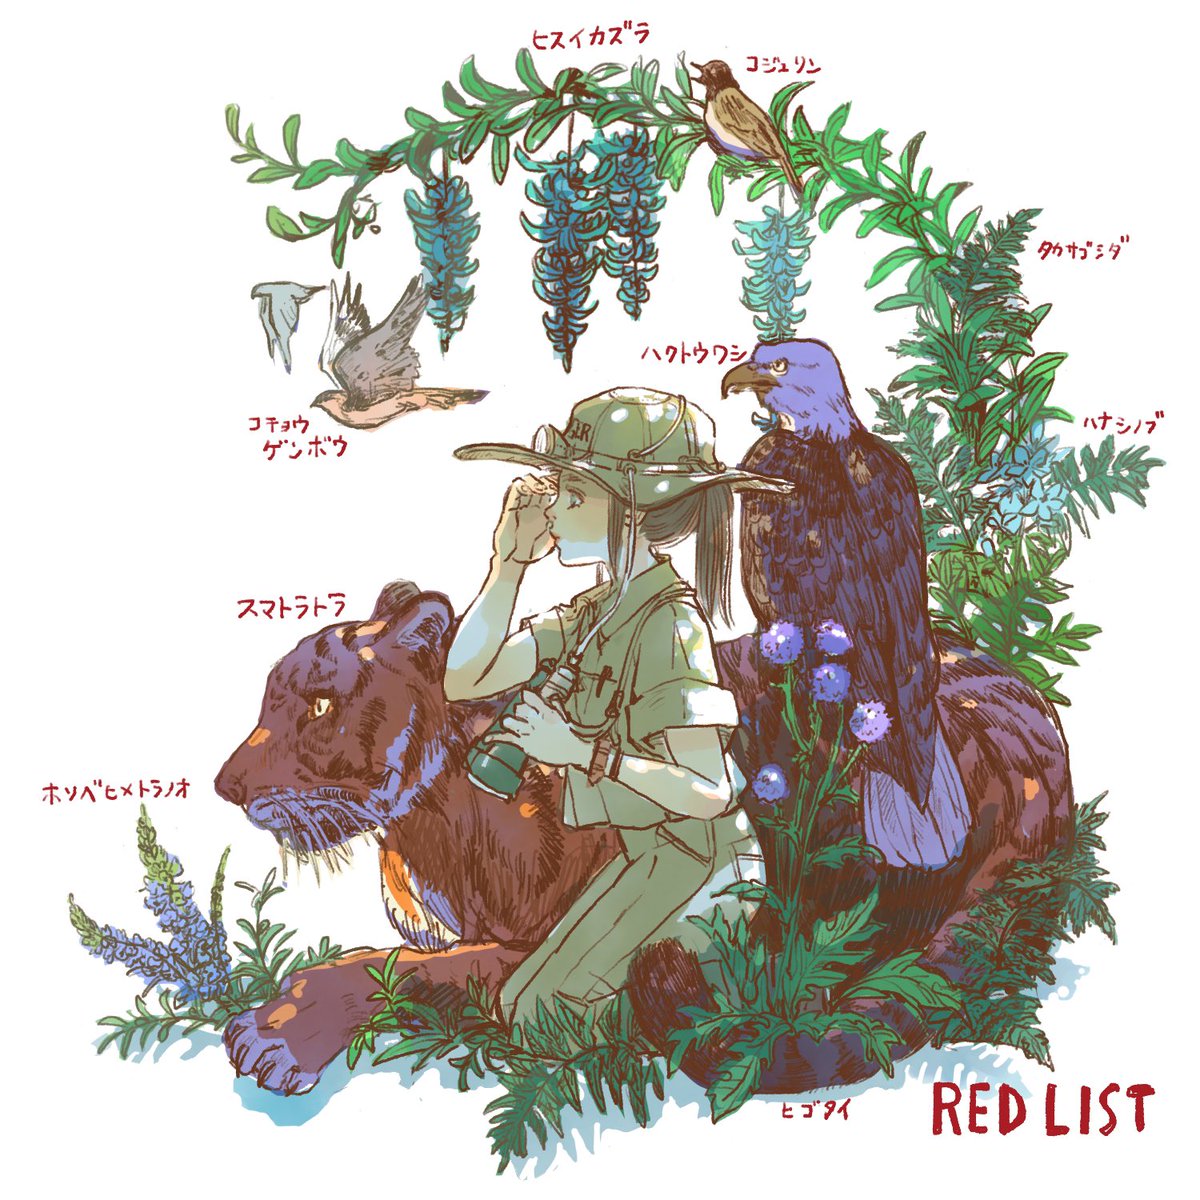 「Red list」|渡邊 春菜のイラスト